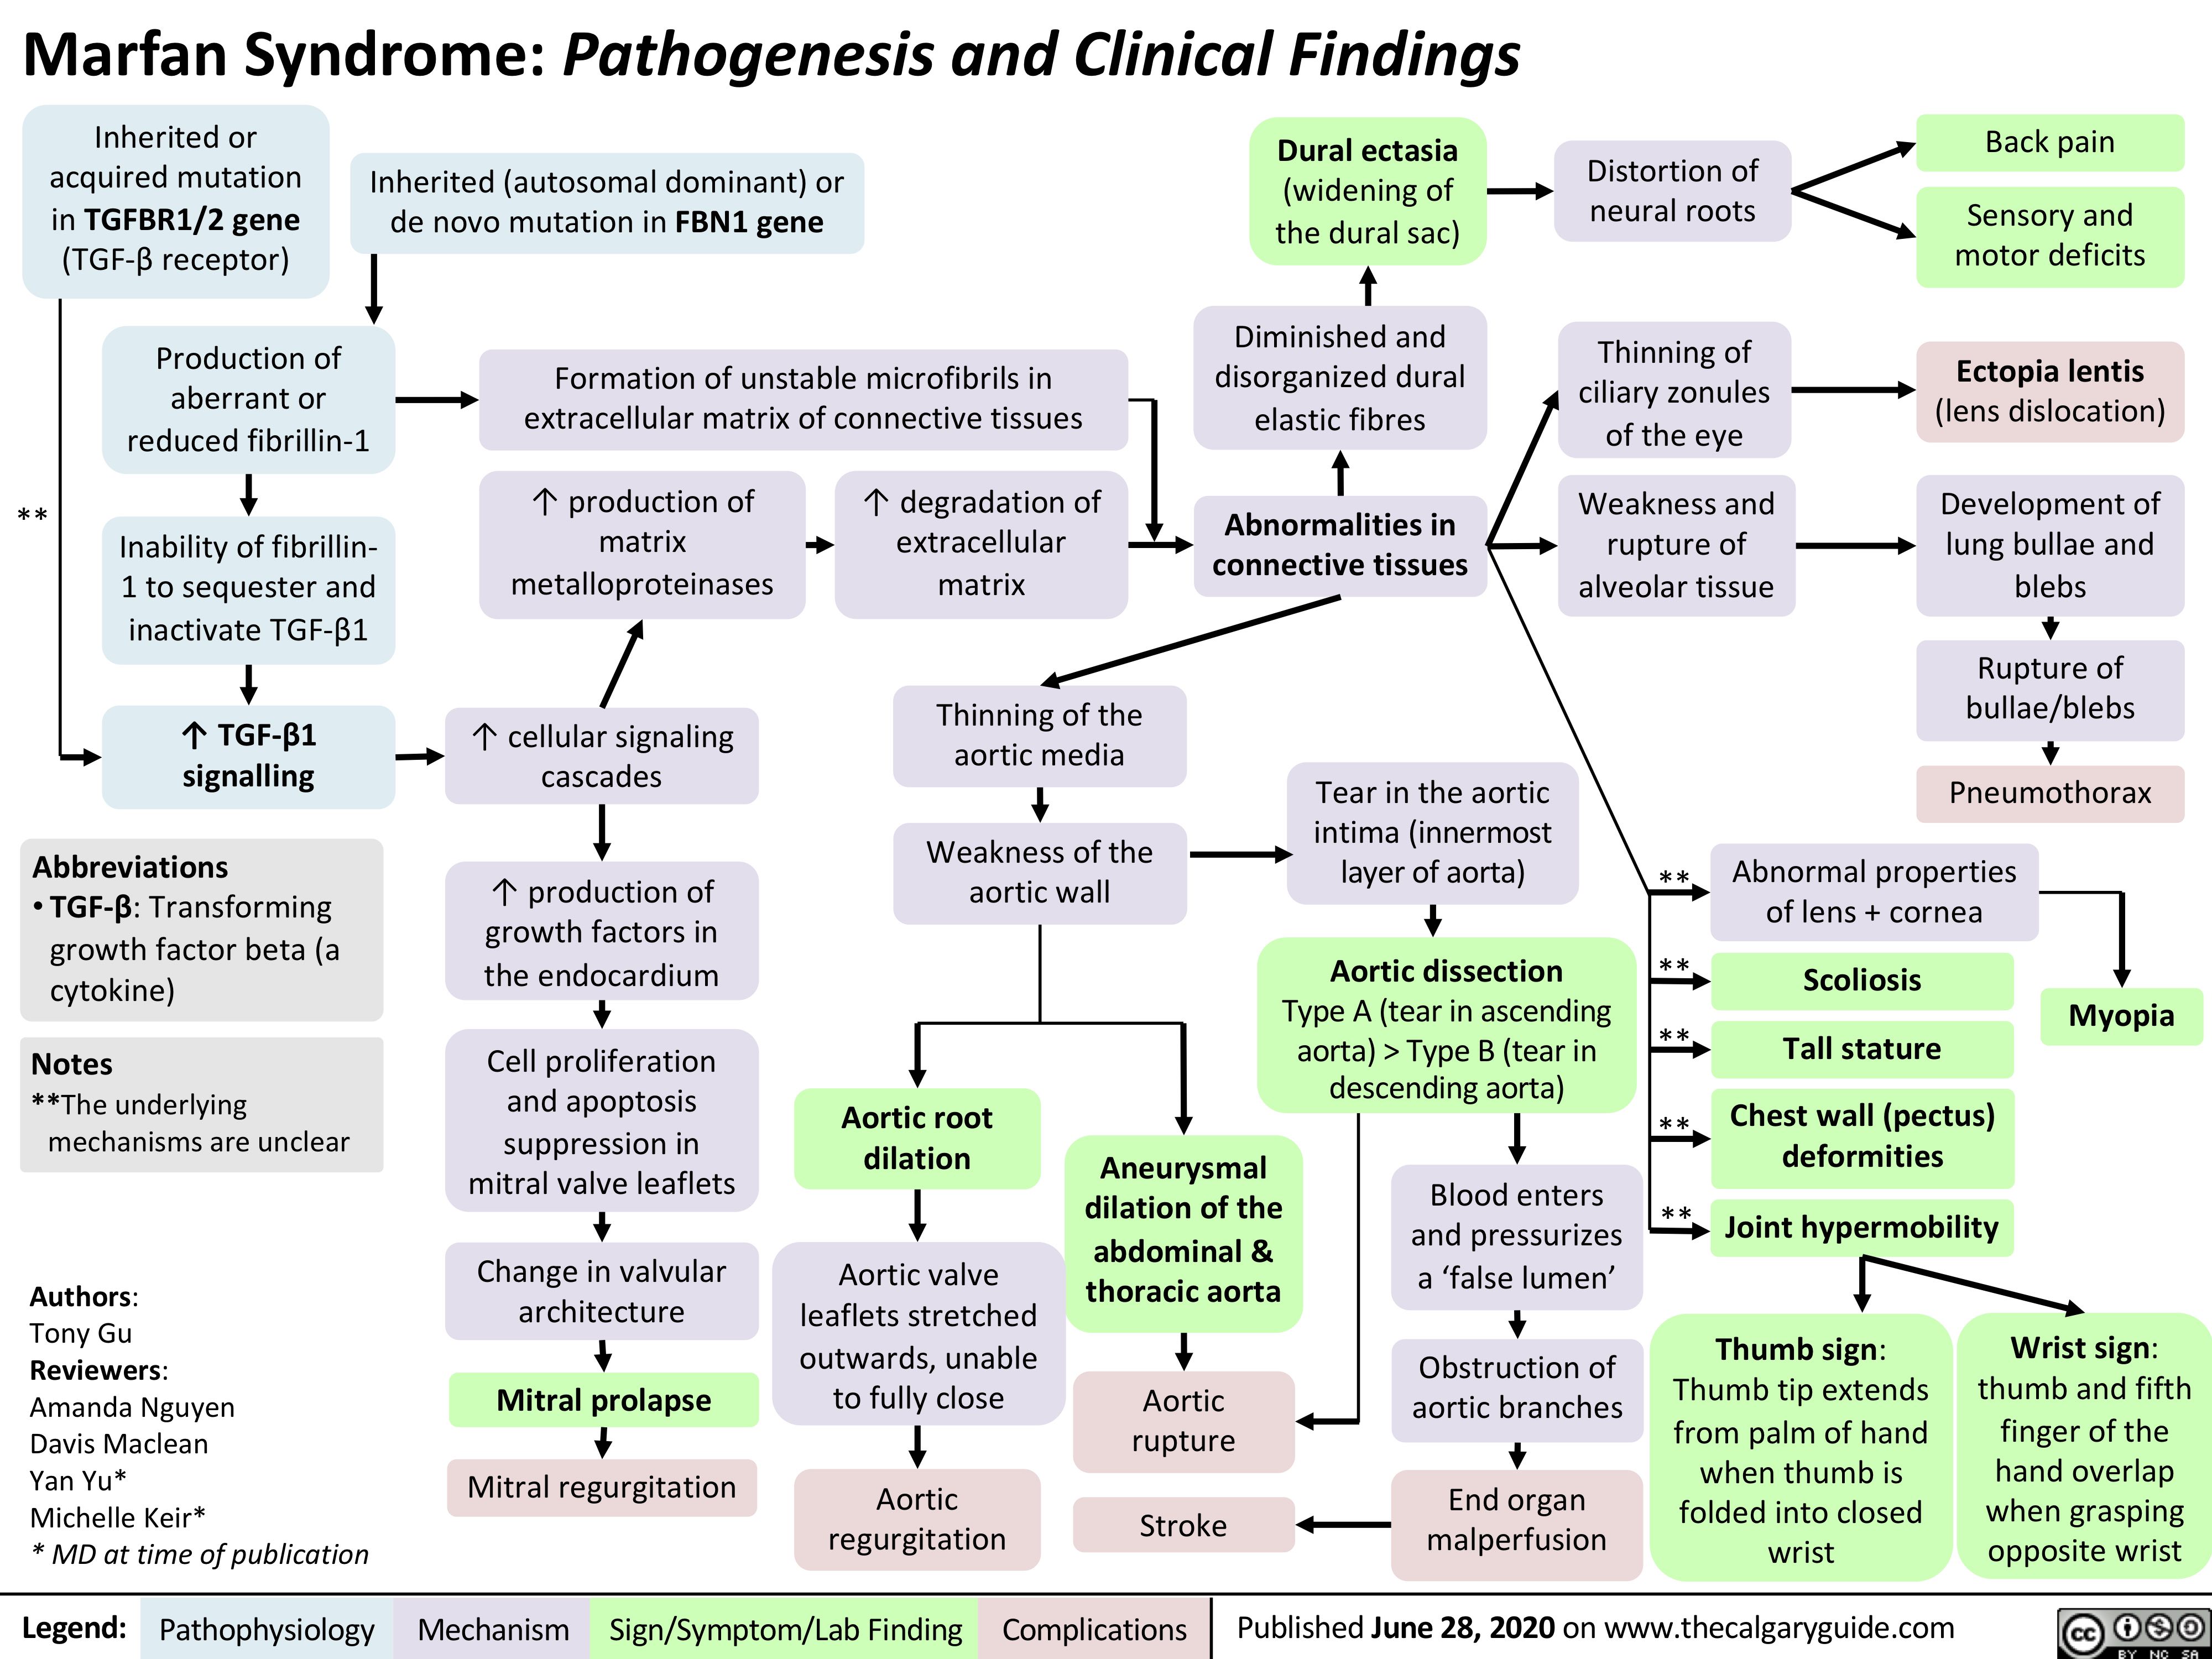 marfan syndrome case study answer key